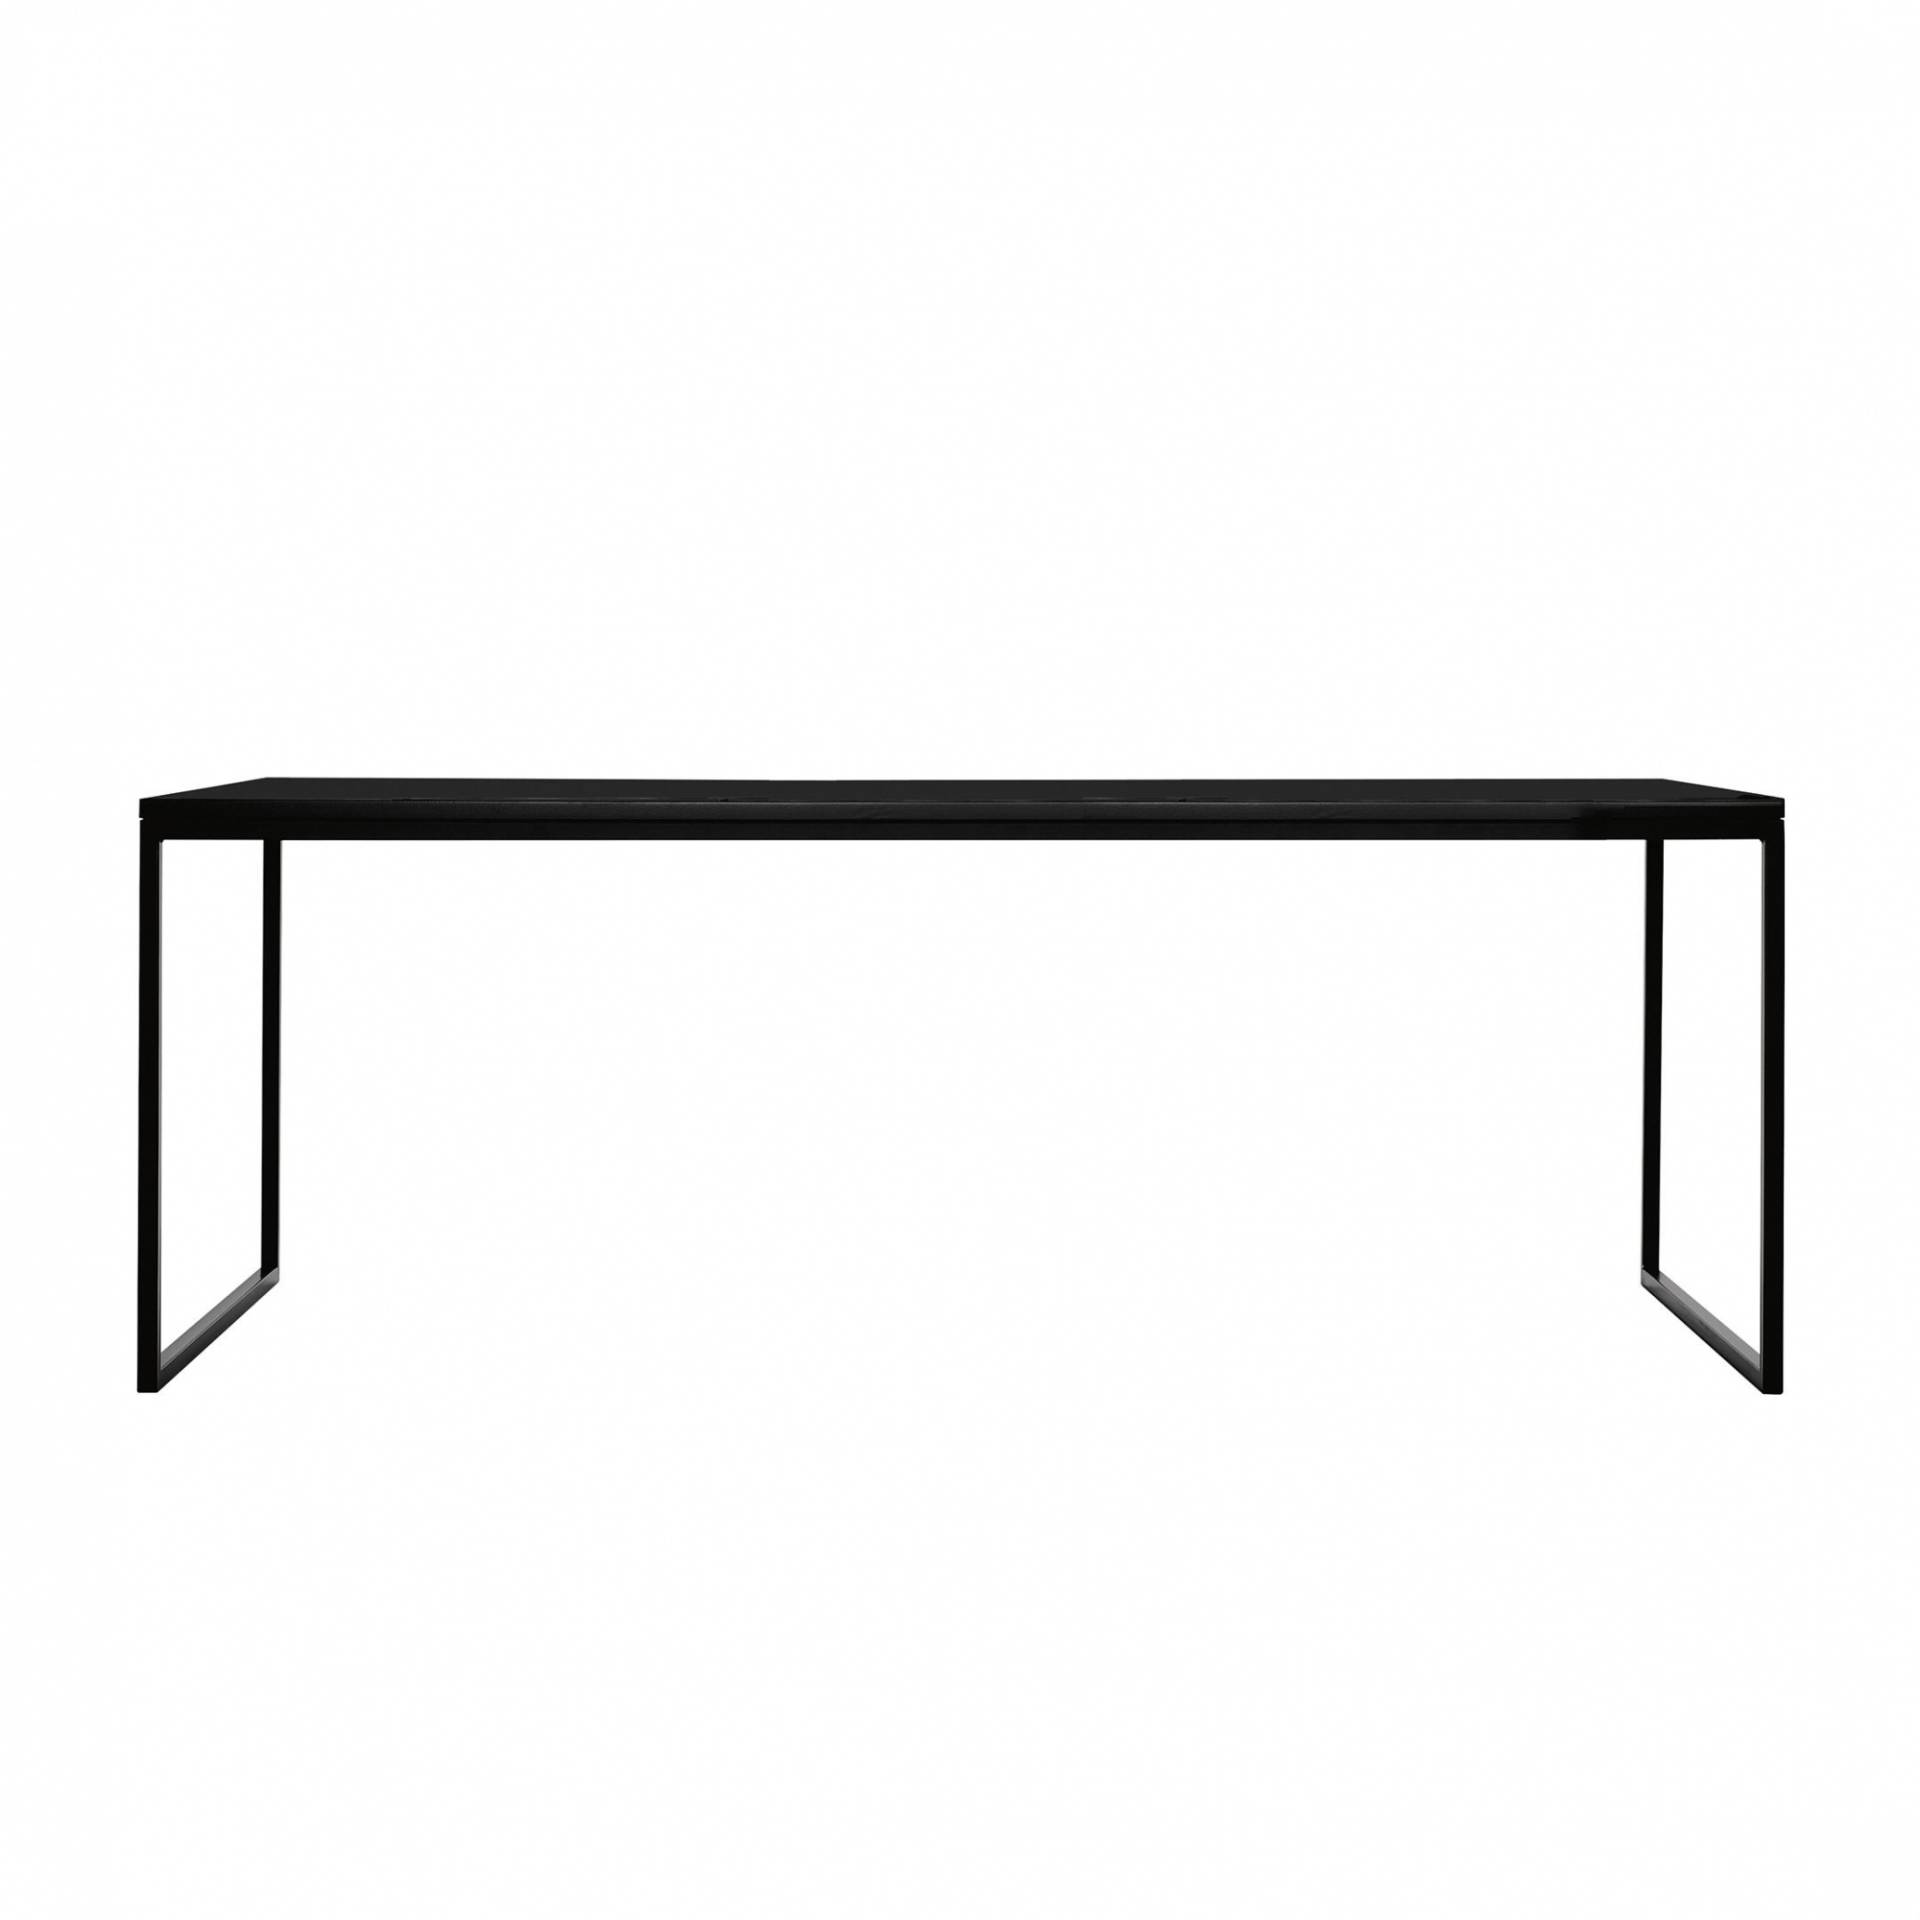 Cappellini - Fronzoni '64 Tisch - schwarz/matt/LxBxH 200x100x73cm von Cappellini